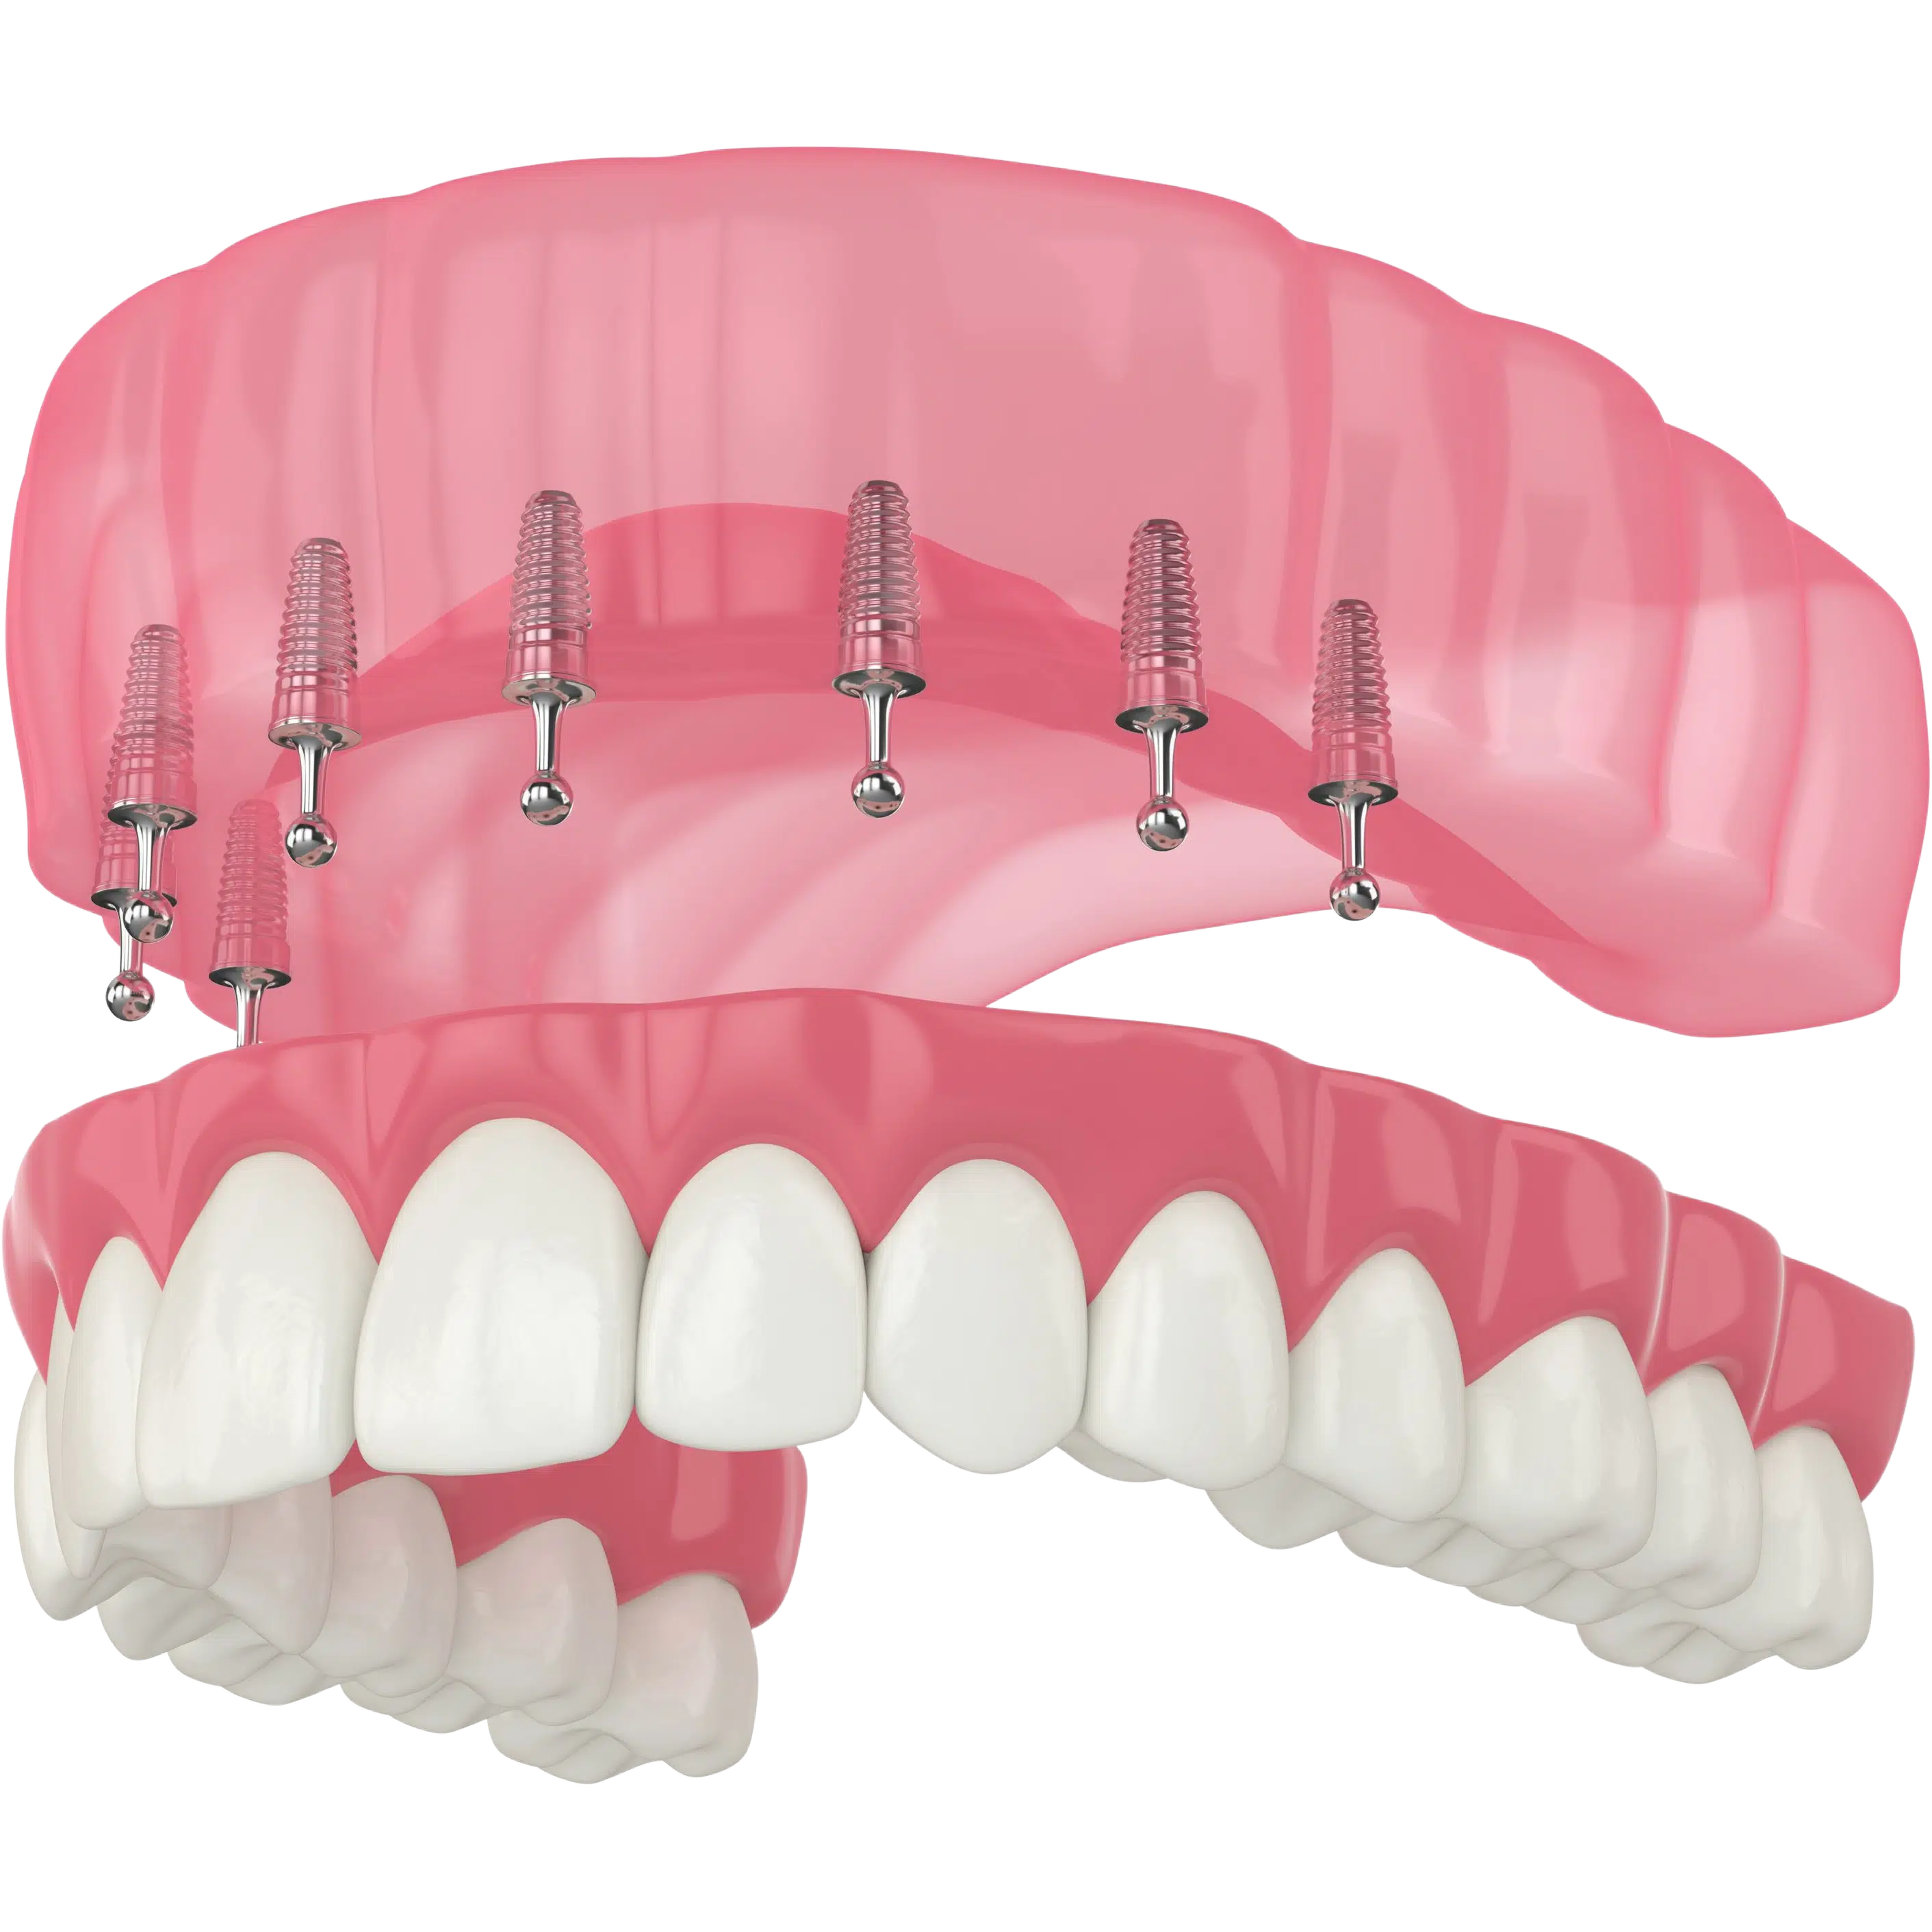 snap-on-dentures